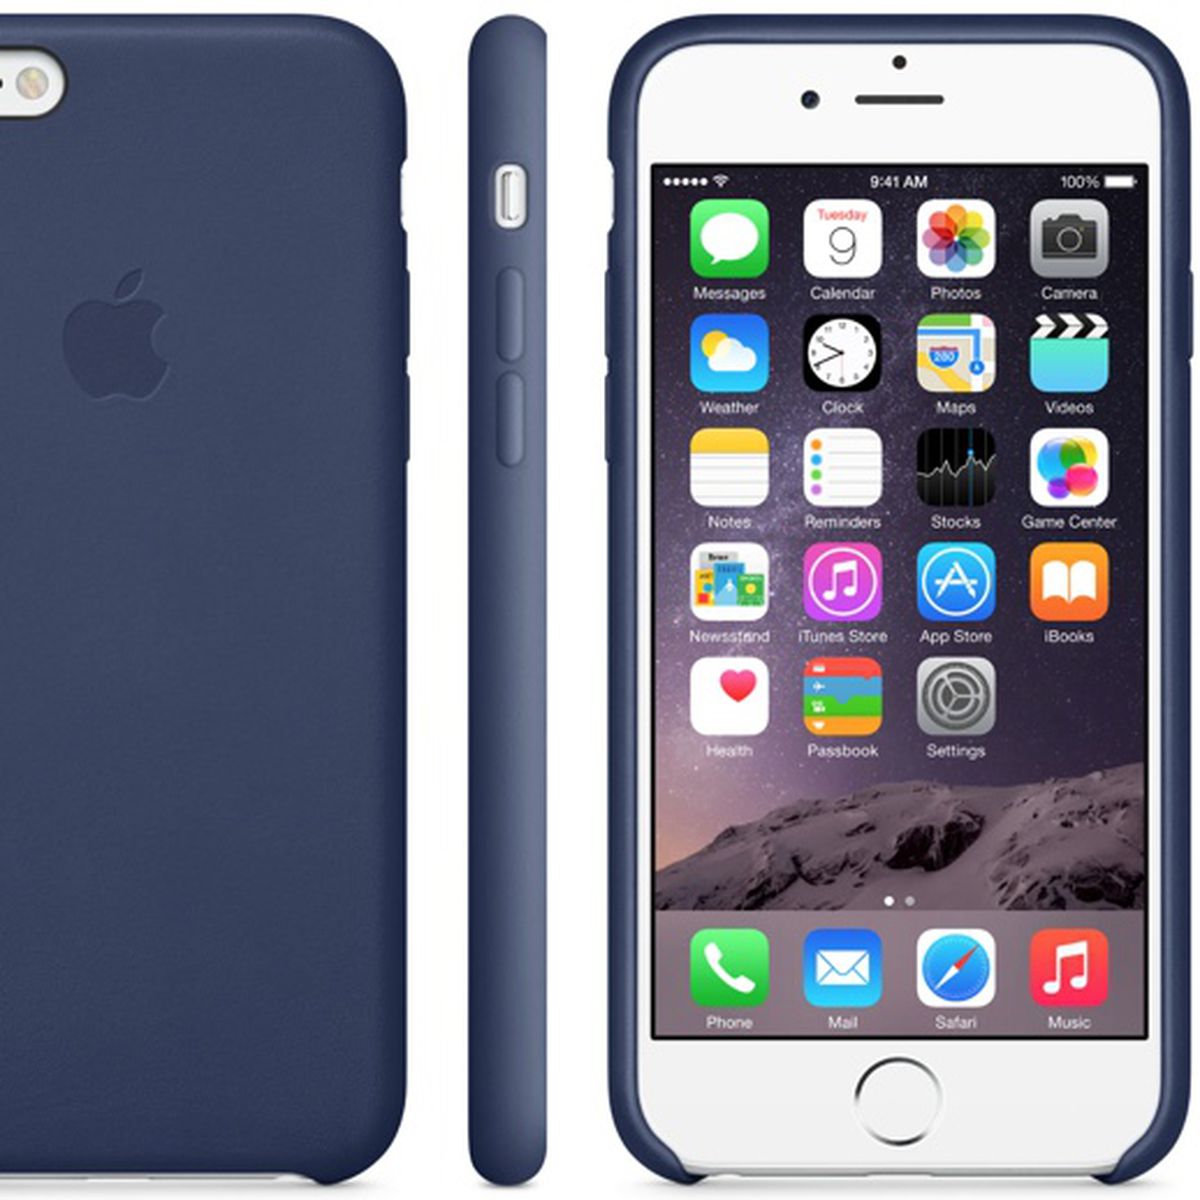 Veilig passage Impasse Apple Selling New Leather/Silicone Cases for iPhone 6, iPhone 6 Plus -  MacRumors